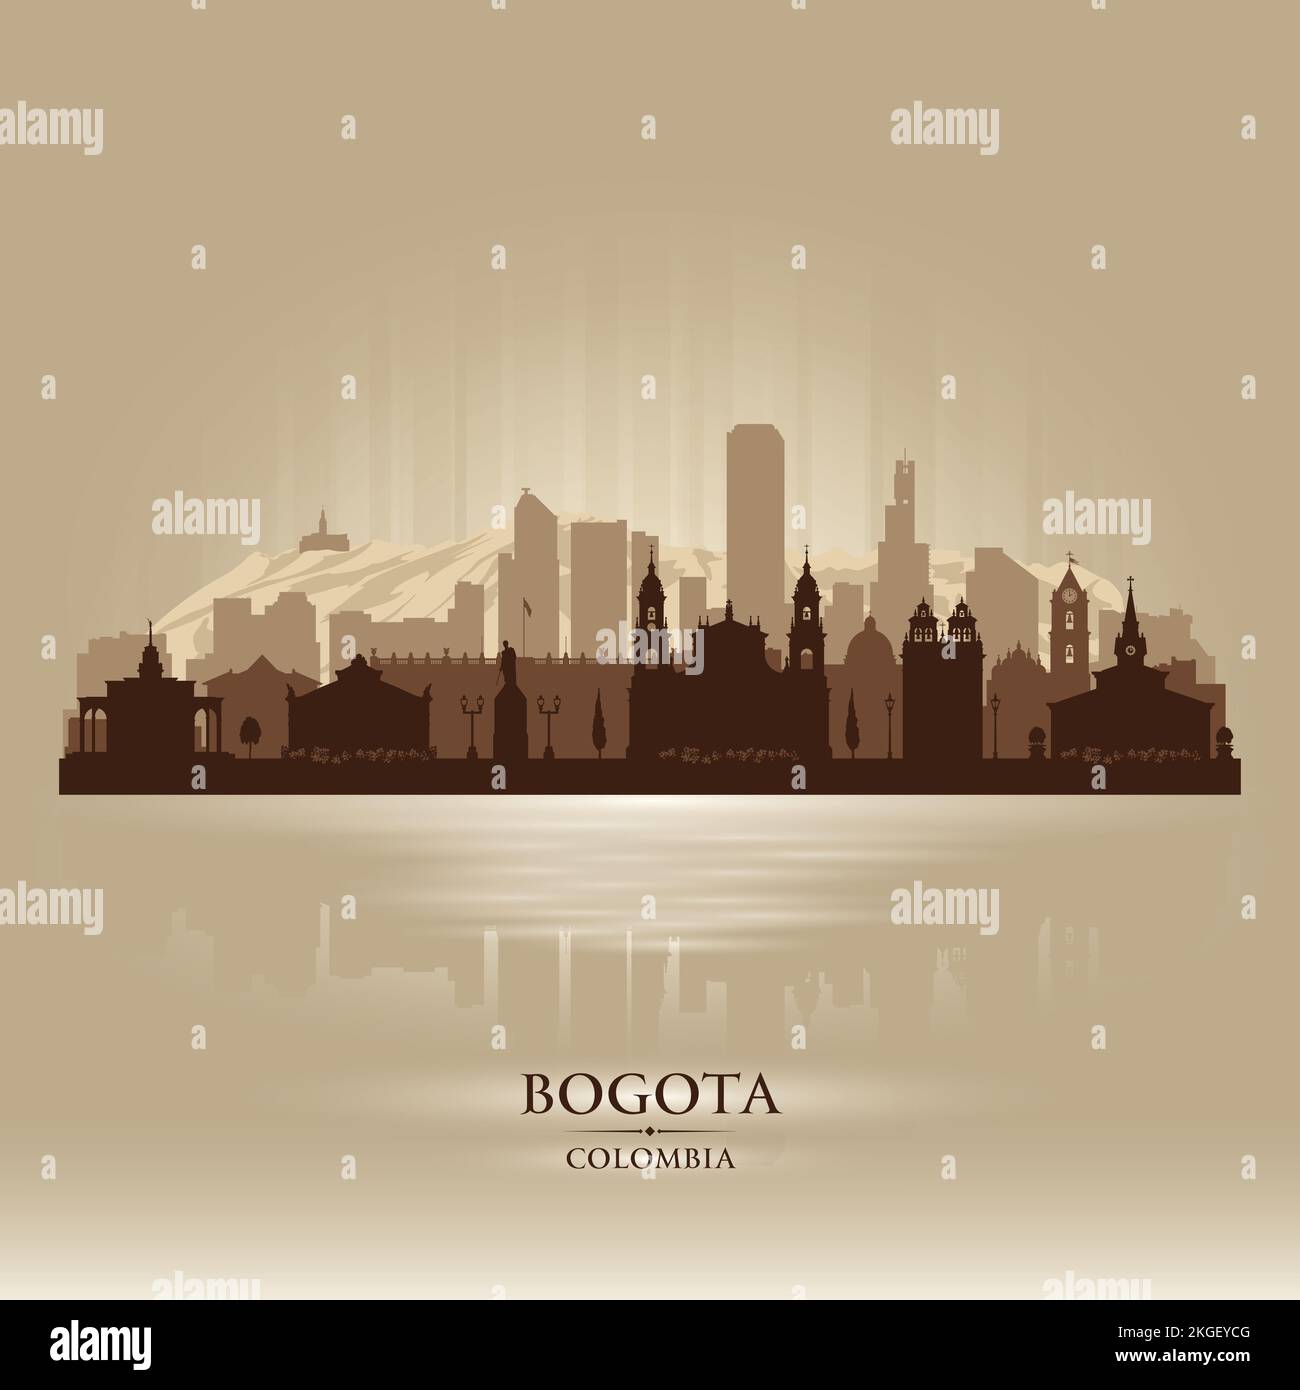 Bogota Colombia city skyline vector silhouette illustration Stock Vector